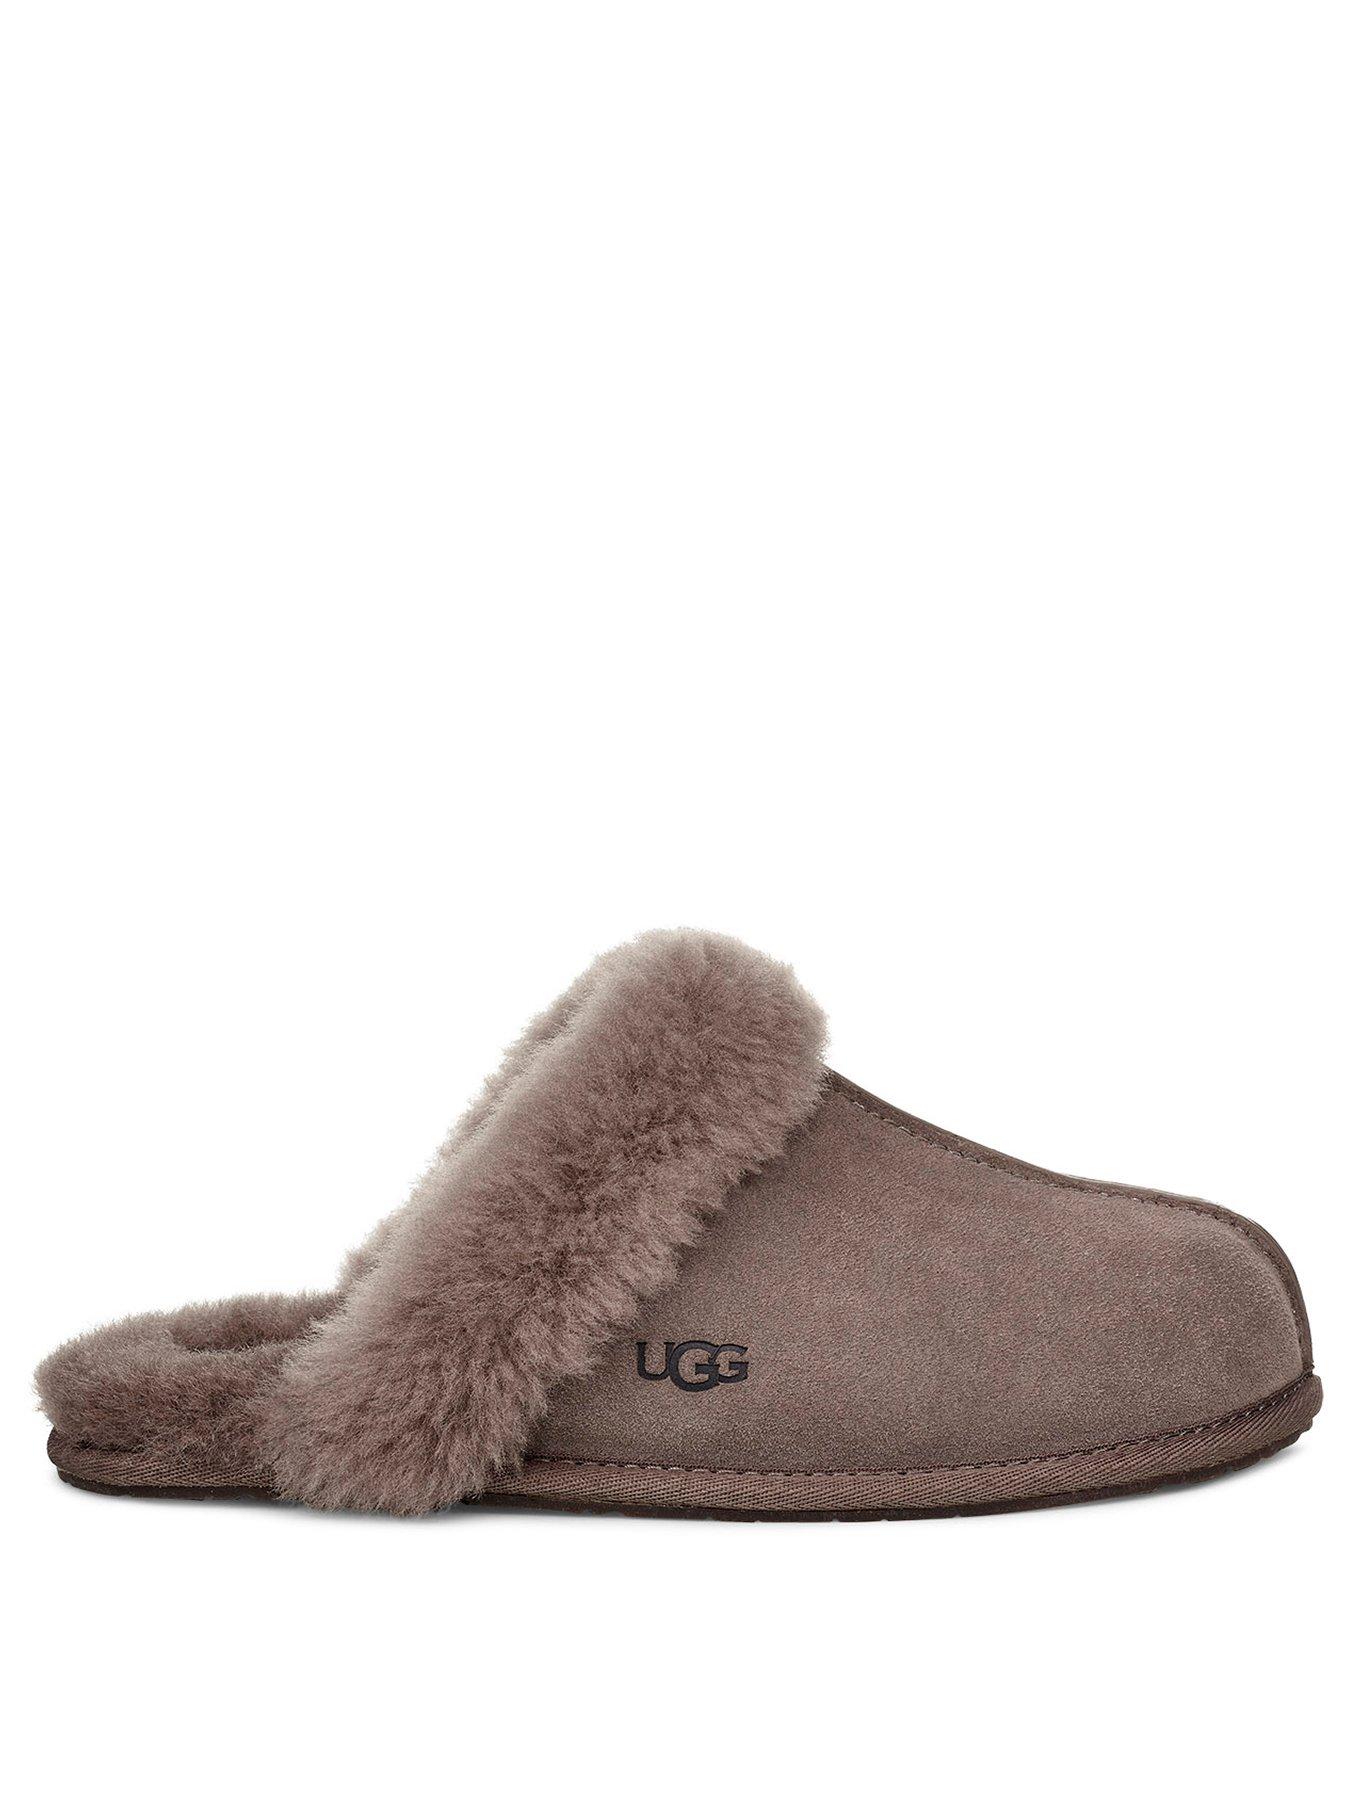 ugg mule slippers